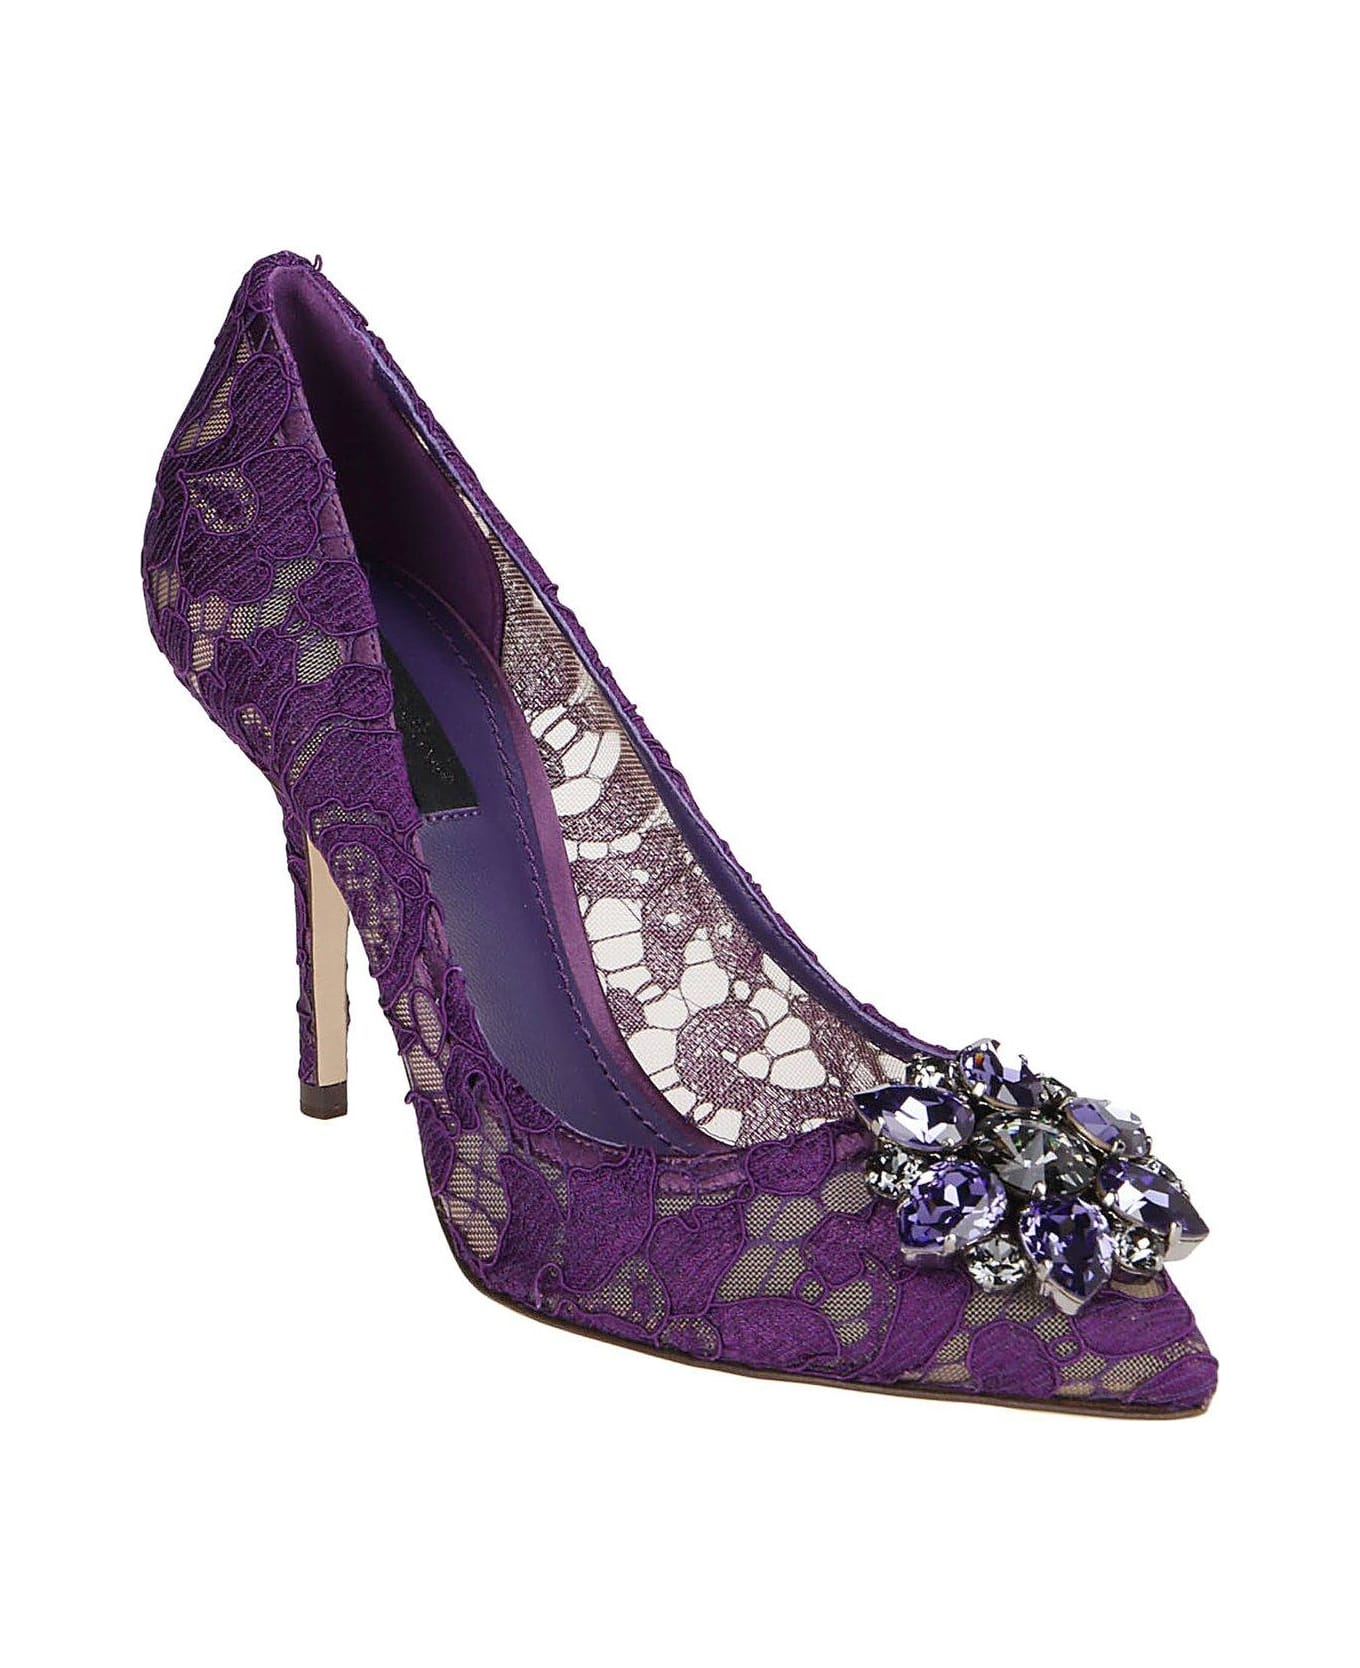 Dolce & Gabbana Taormina Lace Embellished Pumps - Viola